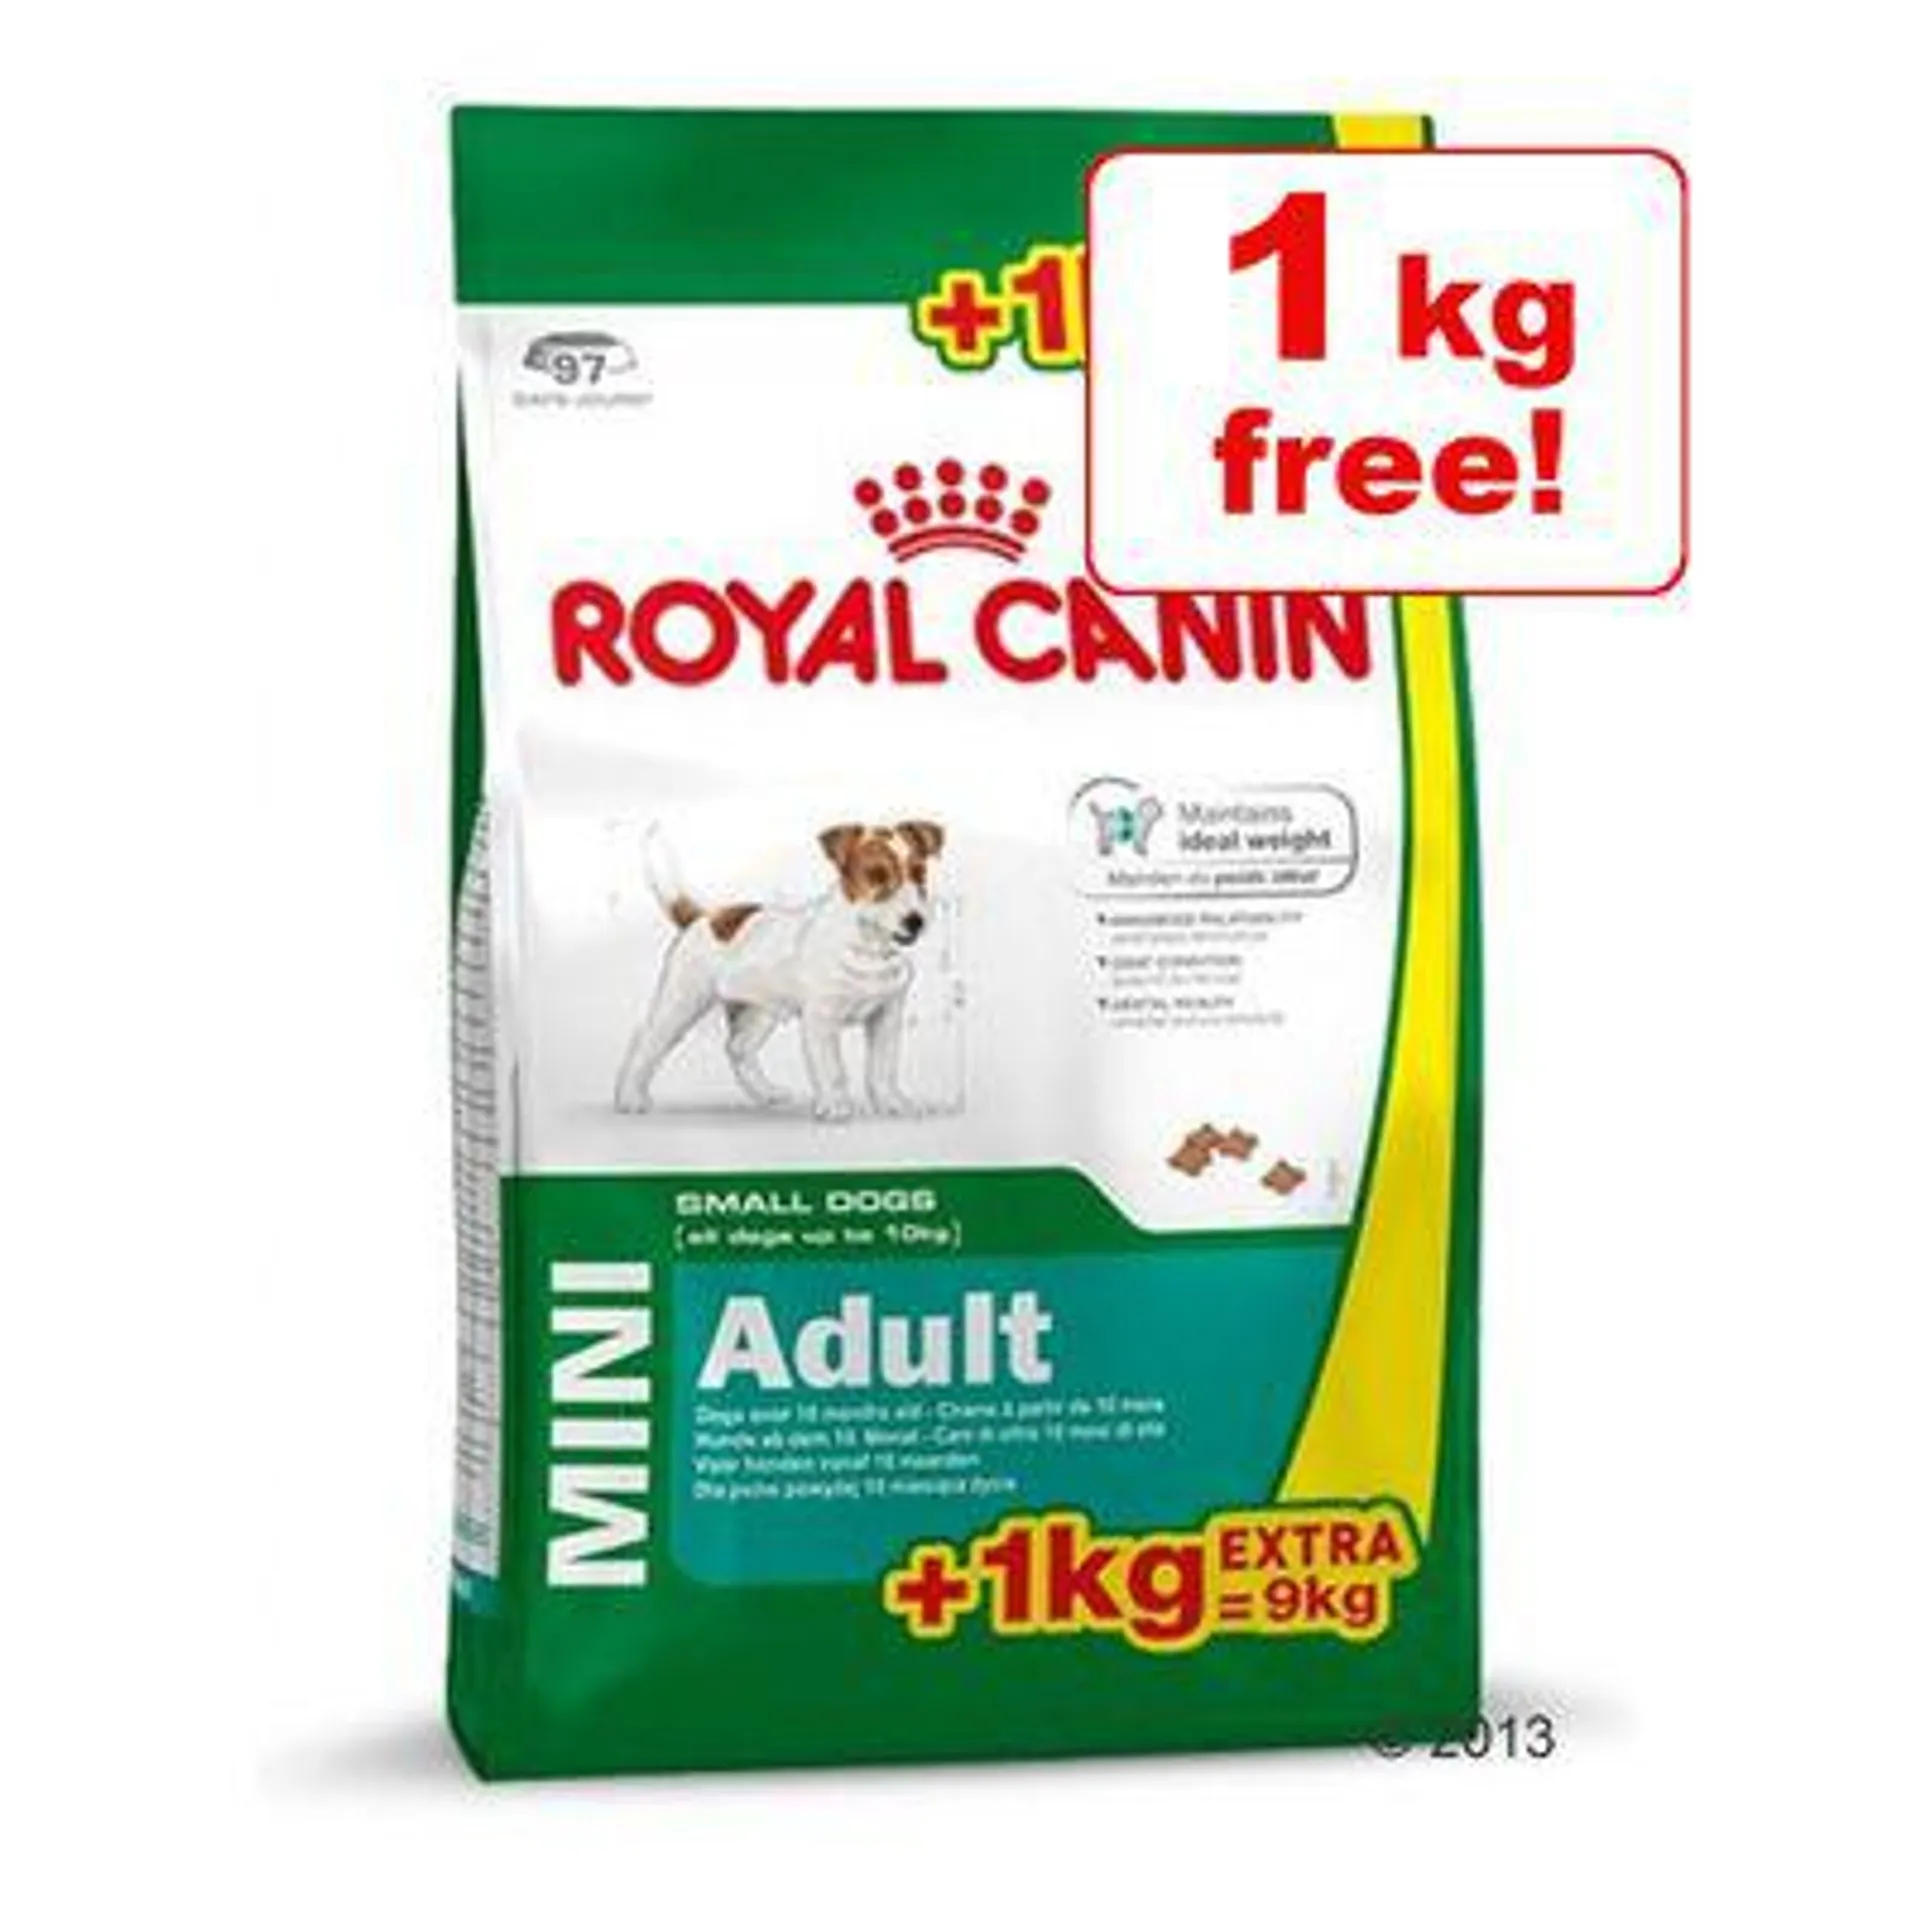 8kg Royal Canin Mini Adult Dry Dog Food + 1kg Free!*